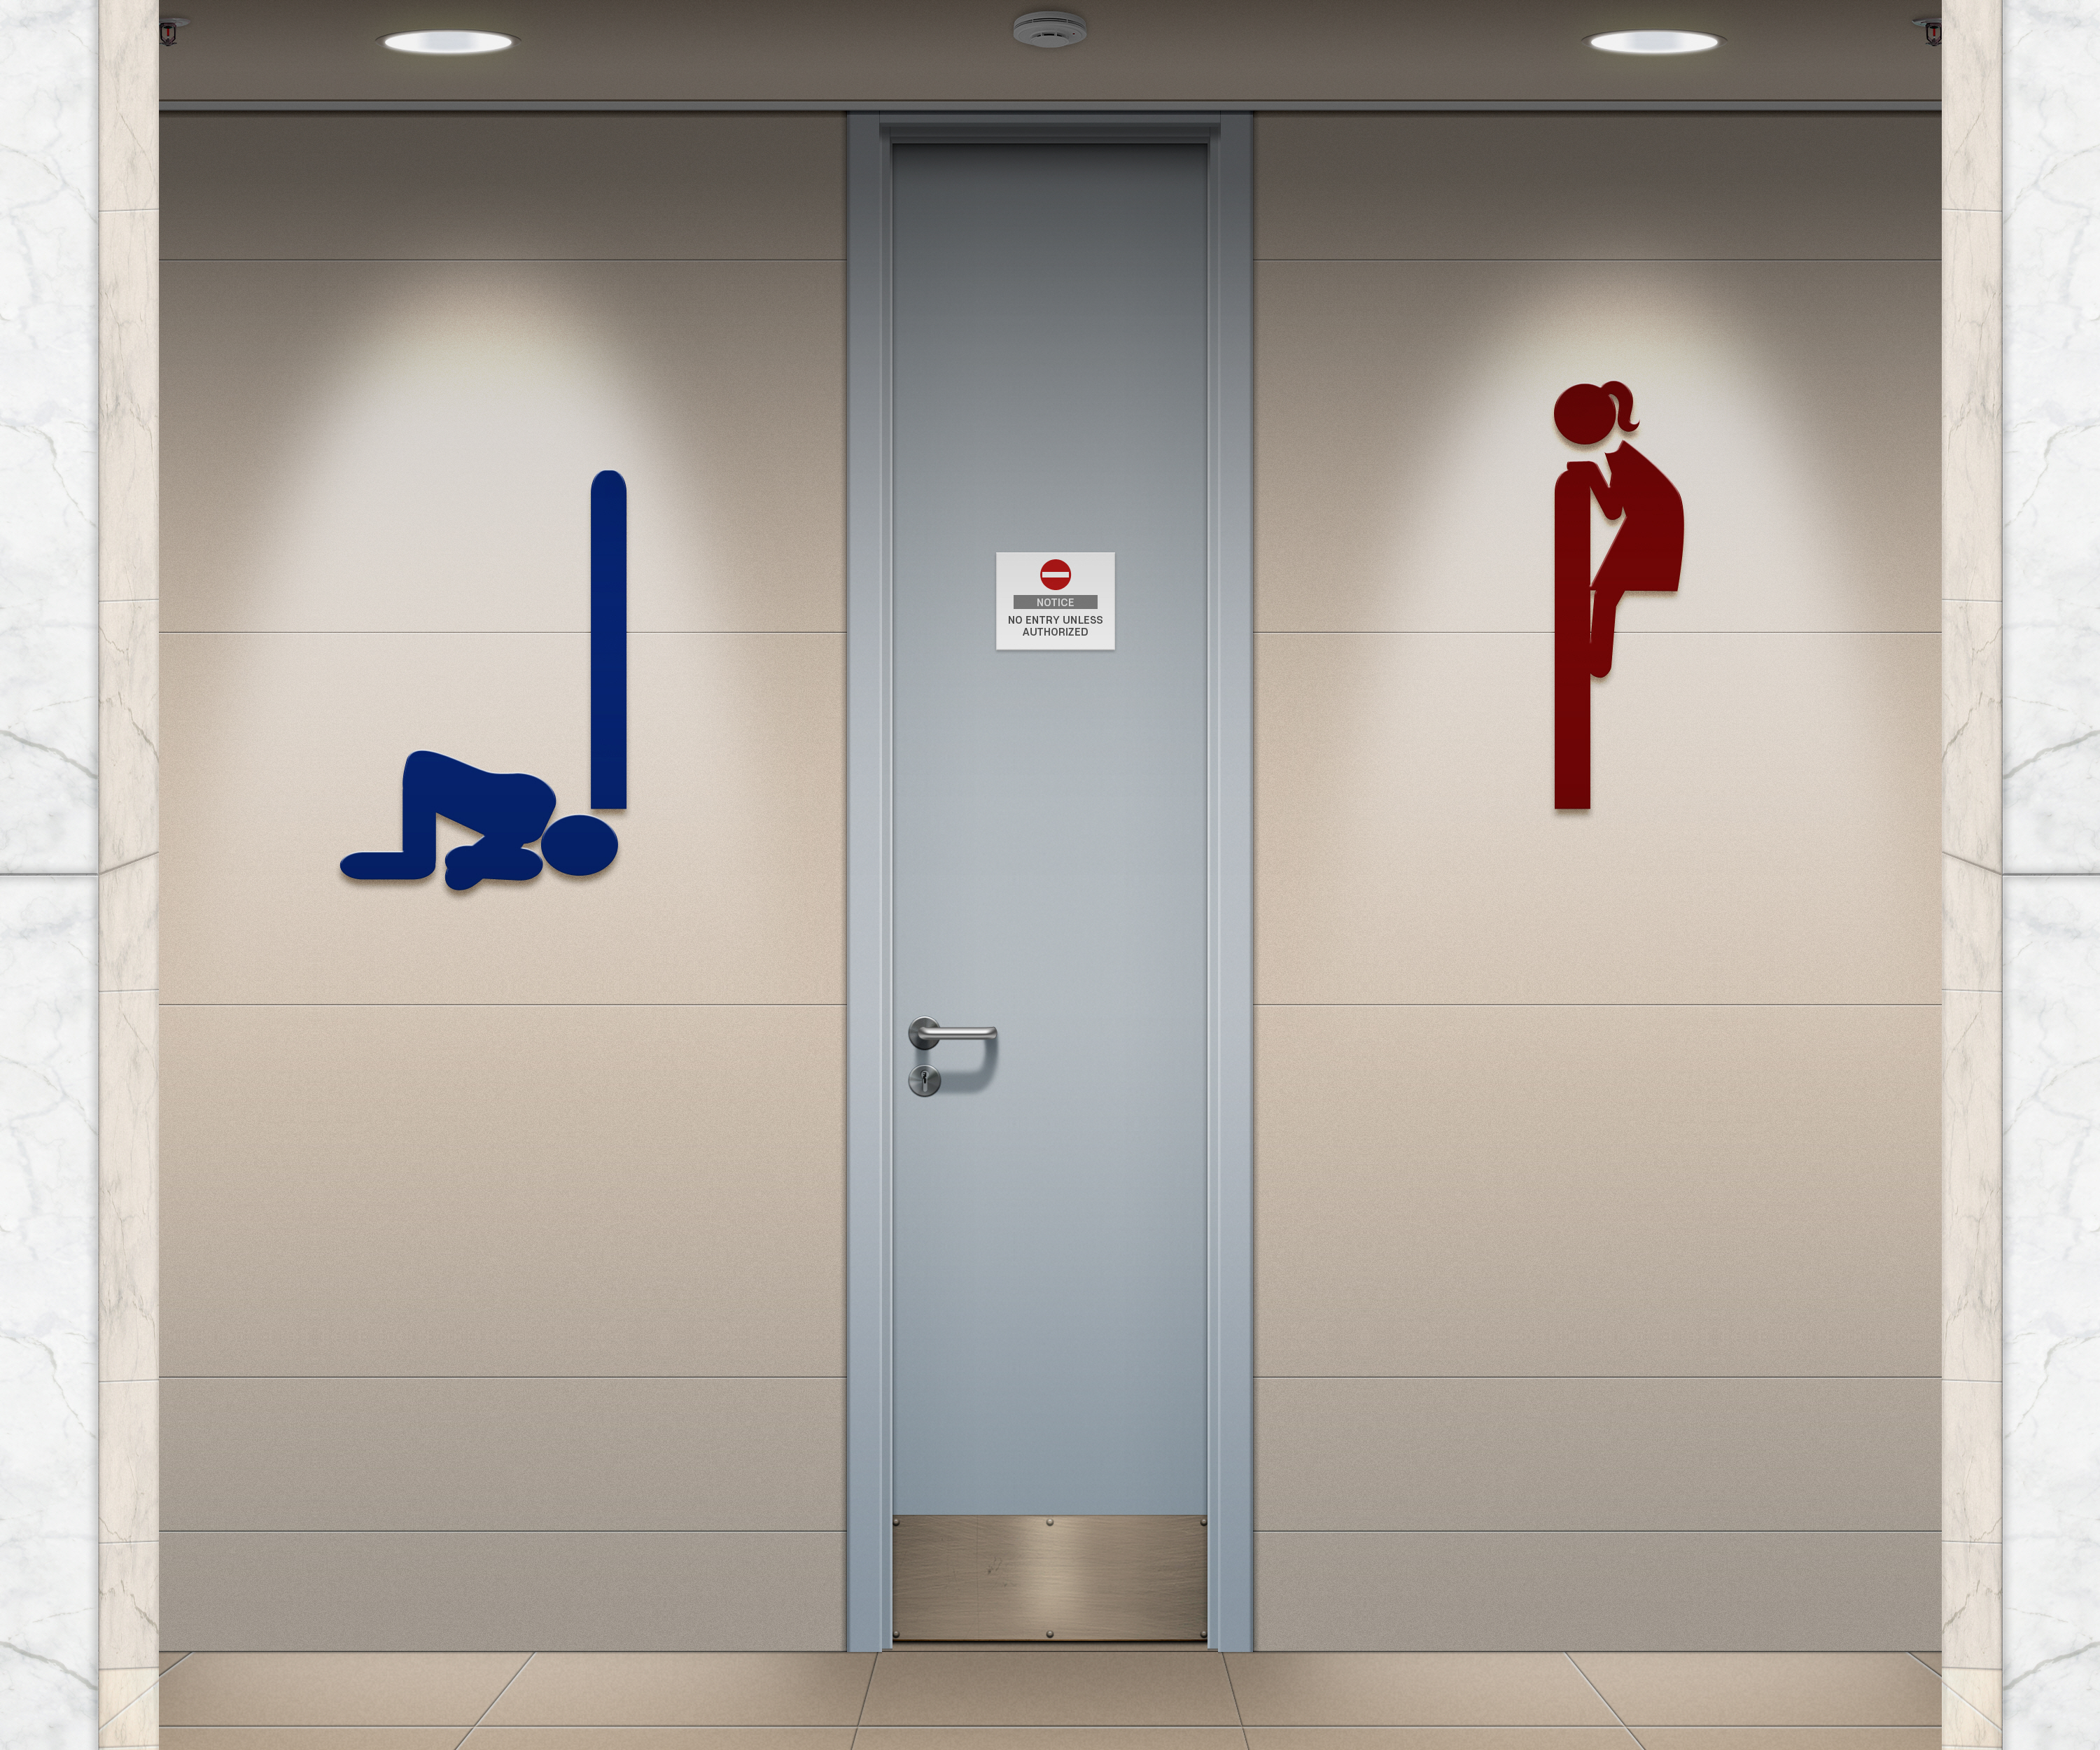 General 3000x2500 toilets public restroom signs humor digital art